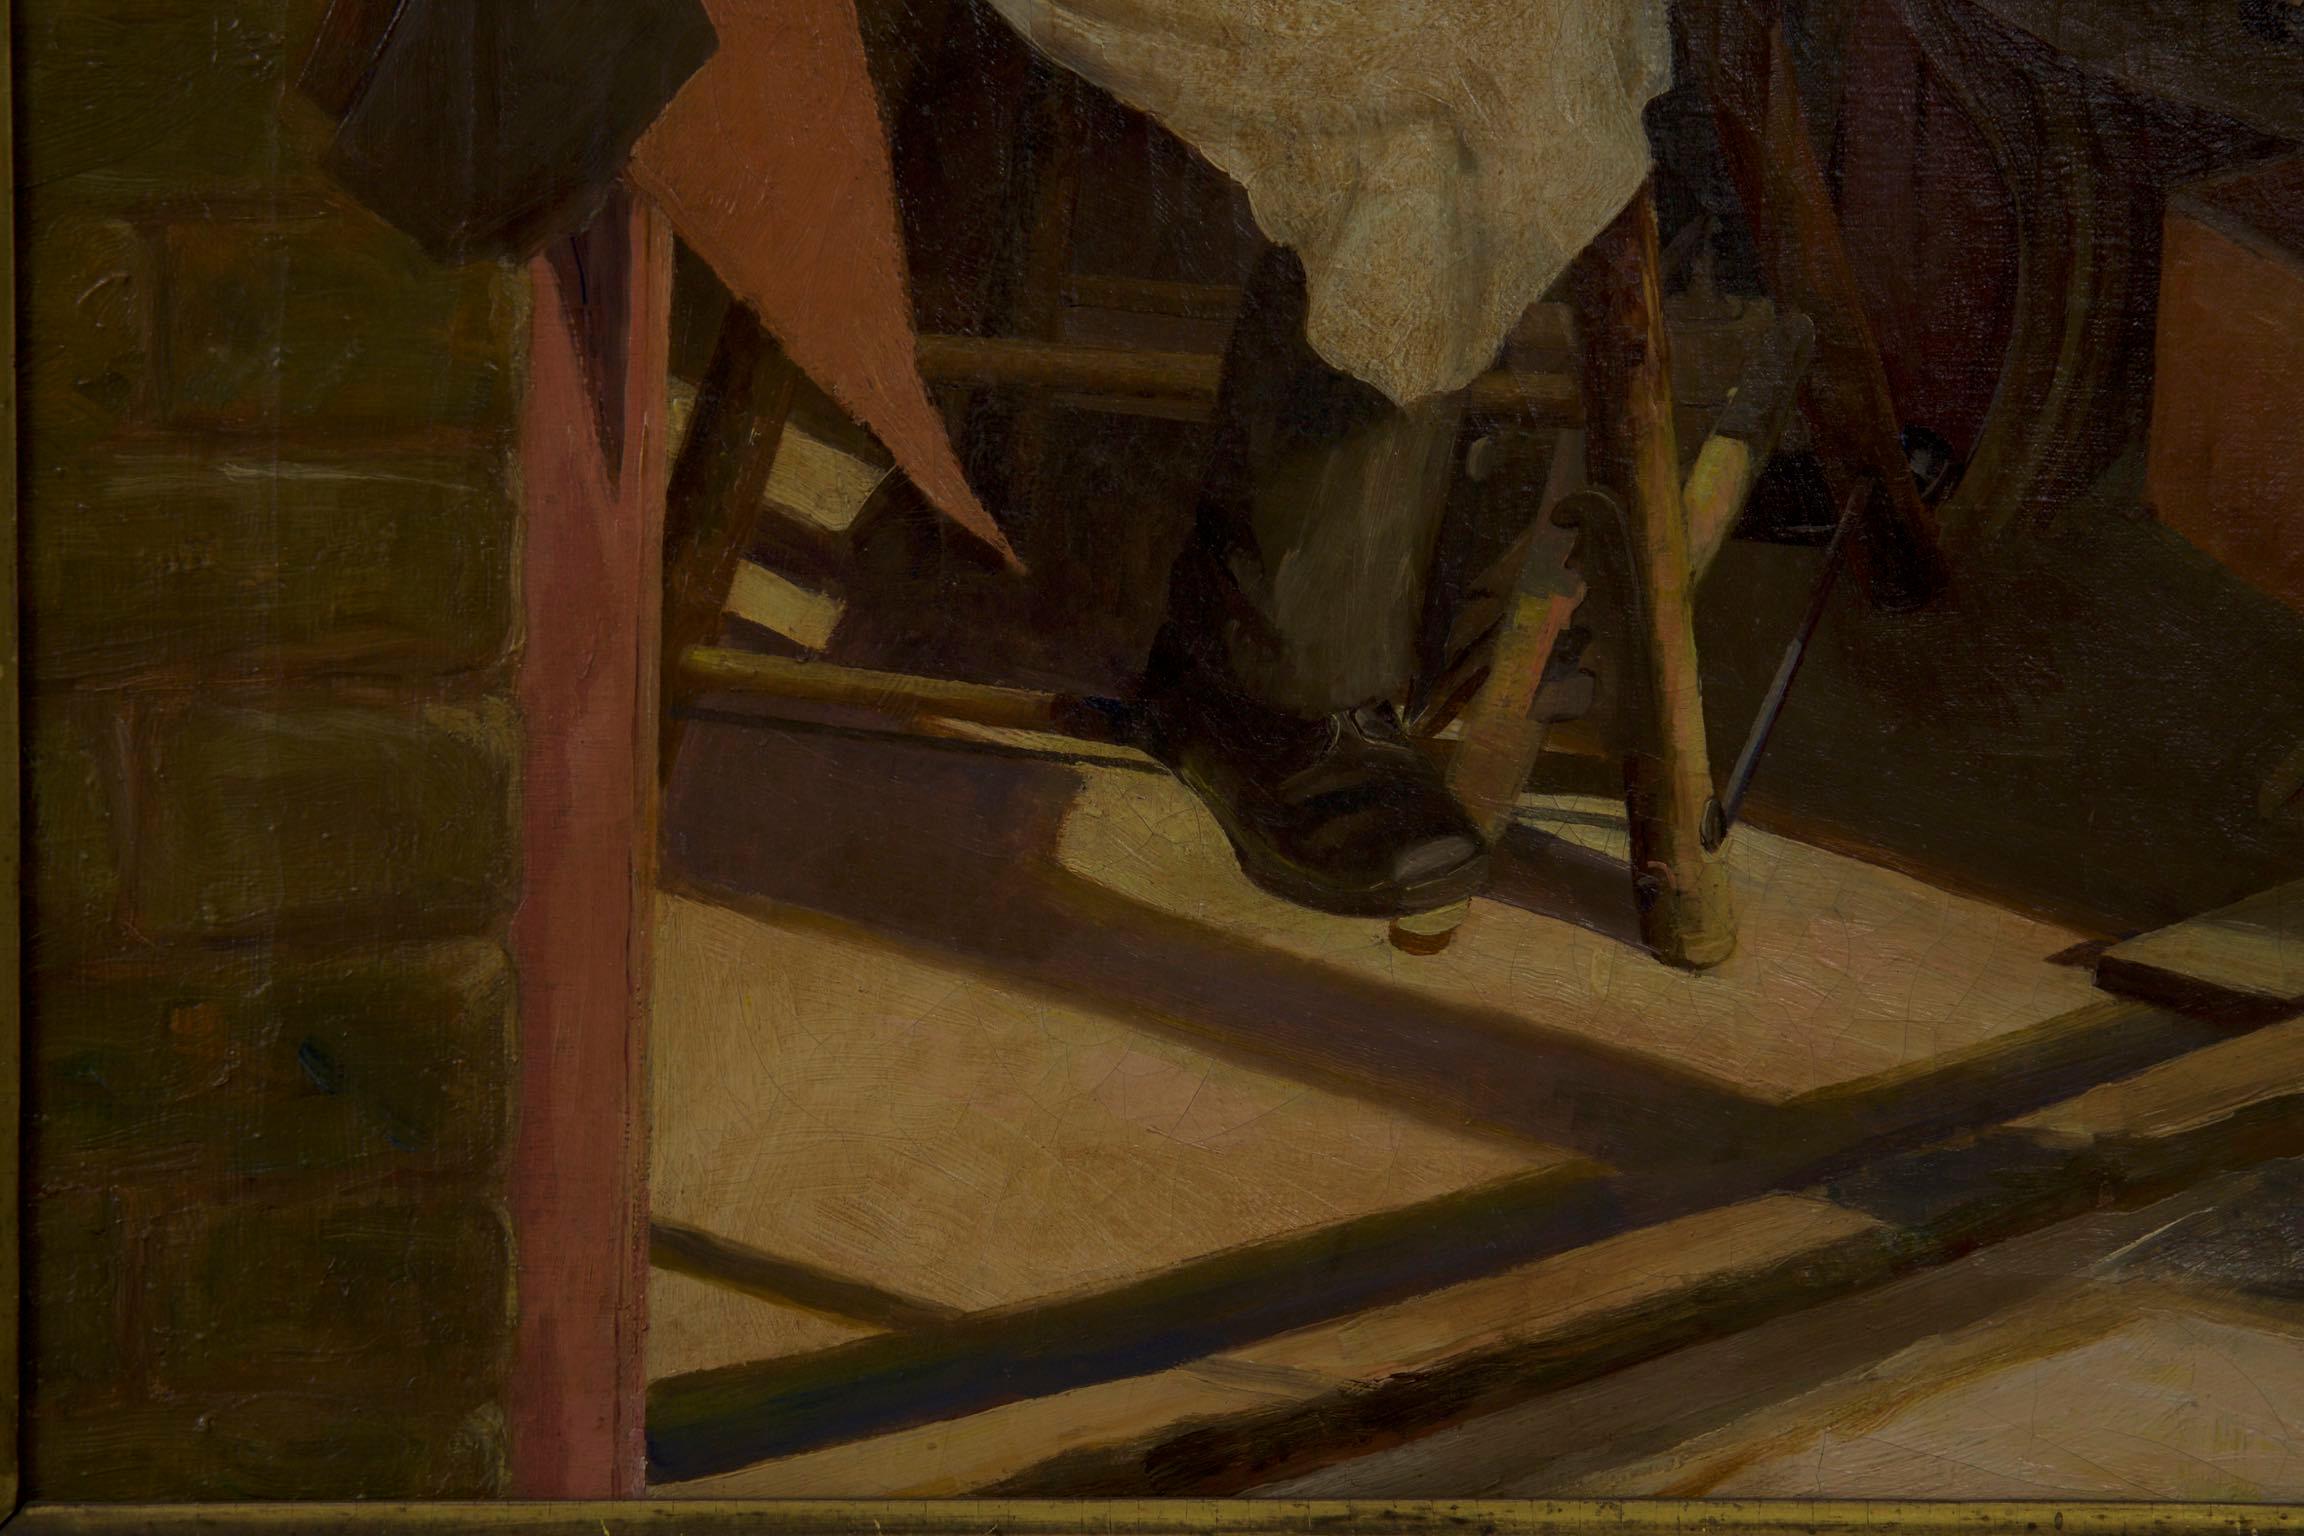 Canvas “Saddlemaker’s Shop” Oil Painting by Joseph Kavanagh R.H.A. (Irish, 1856-1918)